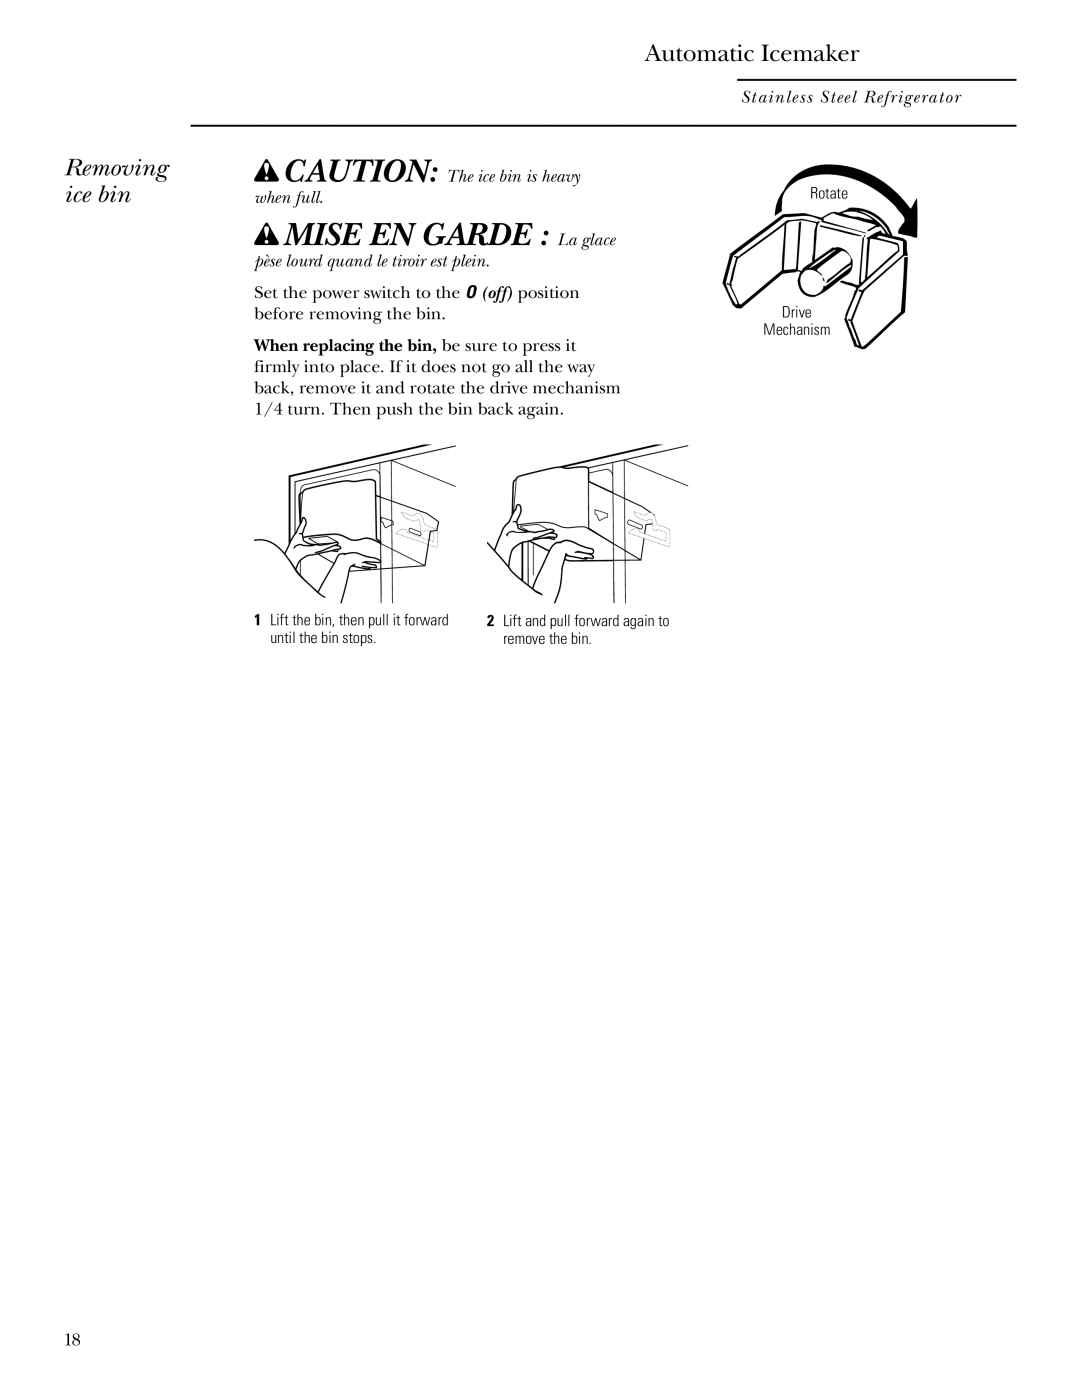 GE Monogram owner manual w MISE EN GARDE La glace, Removing ice bin, Automatic Icemaker, Stainless Steel Refrigerator 